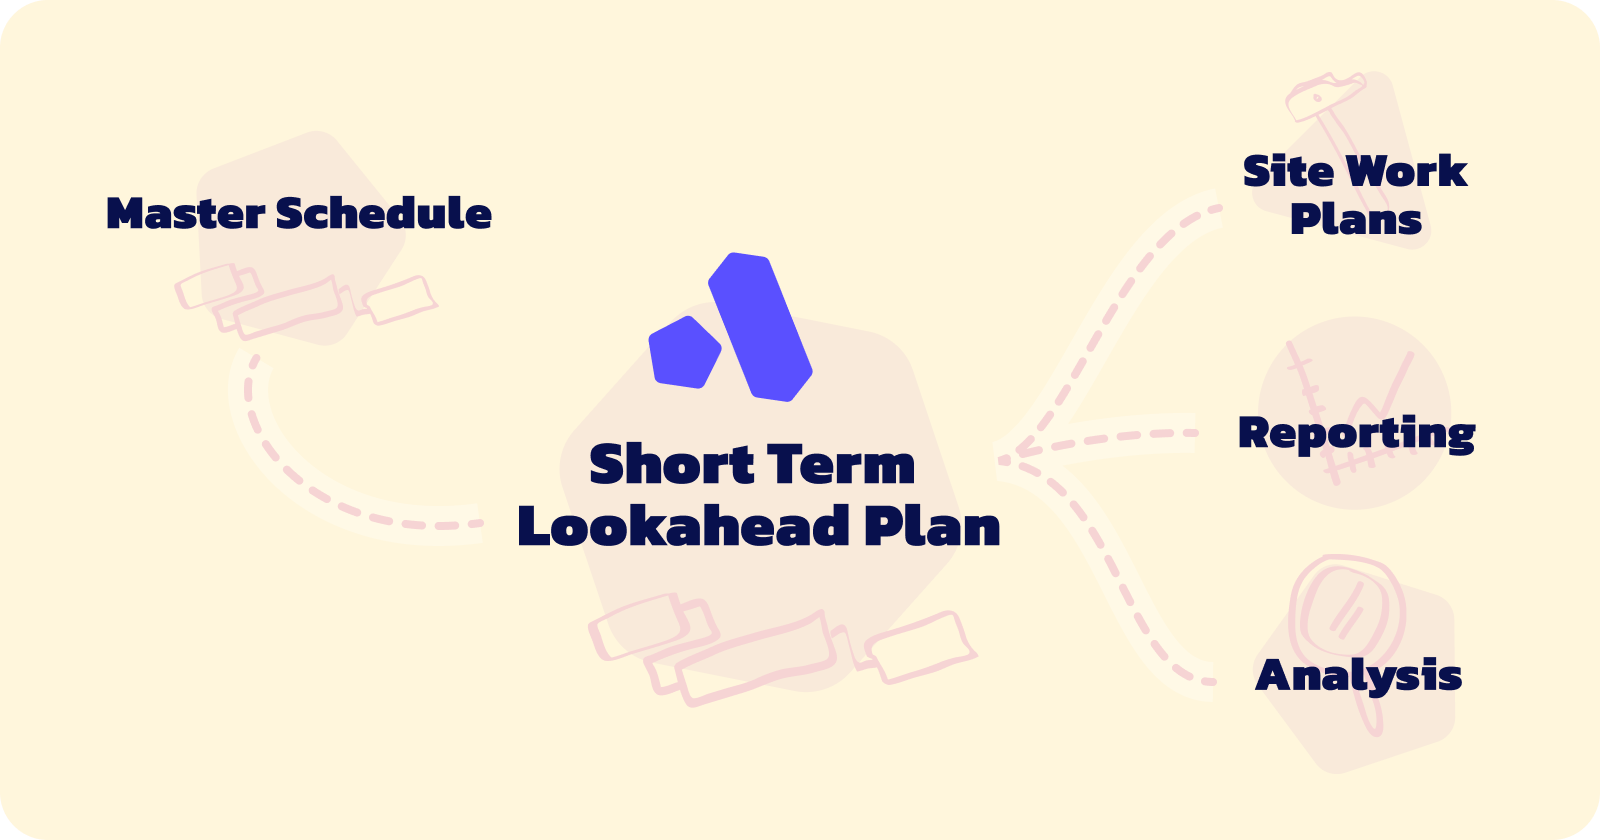 A sketch of short term lookahead plans in construction